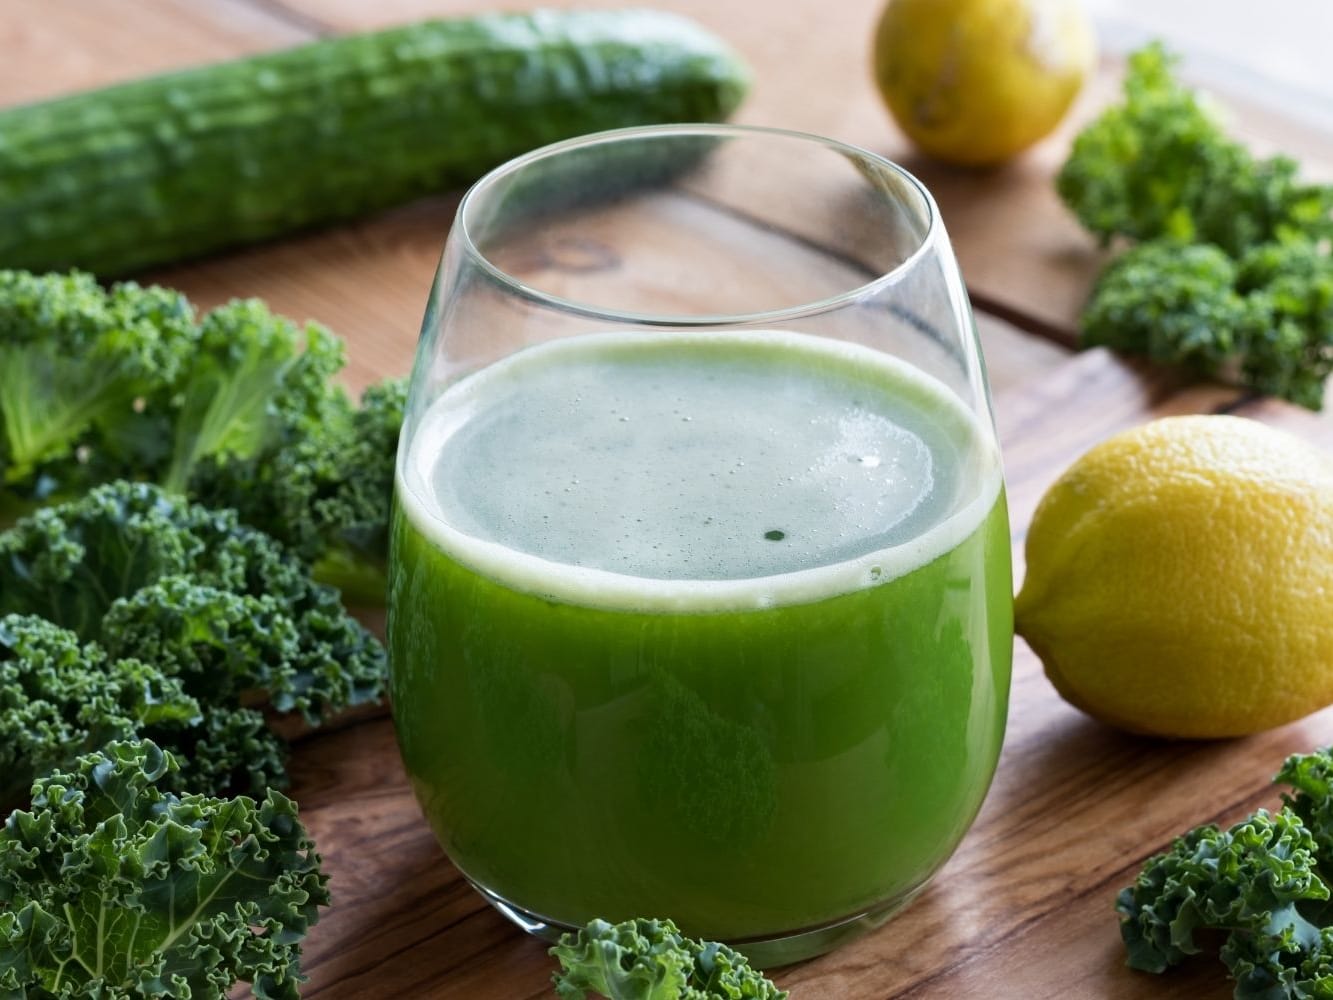 How To Make Kale Juice In A Blender